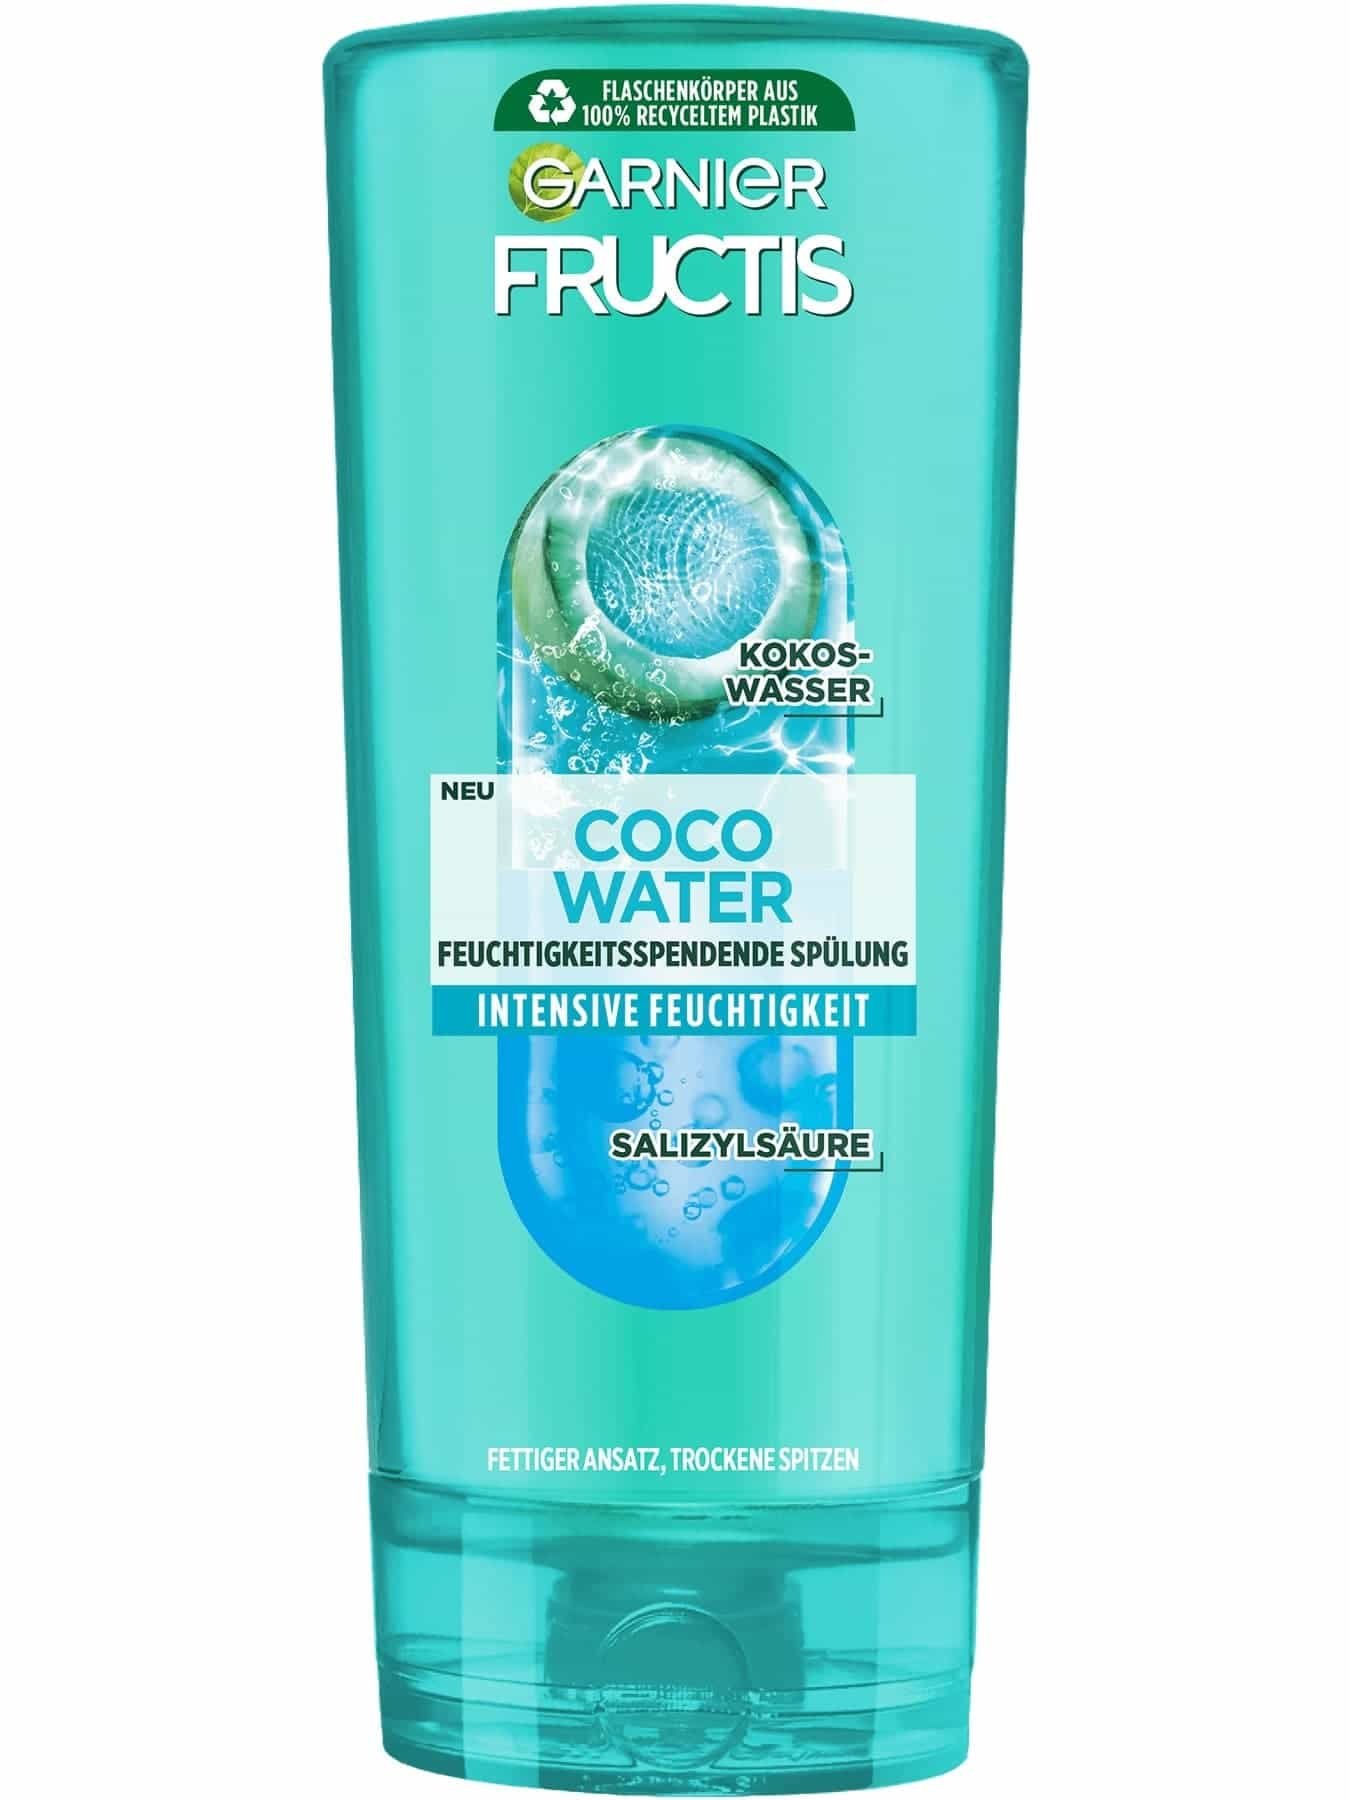 Fructis Coco Water Spülung Produktbild